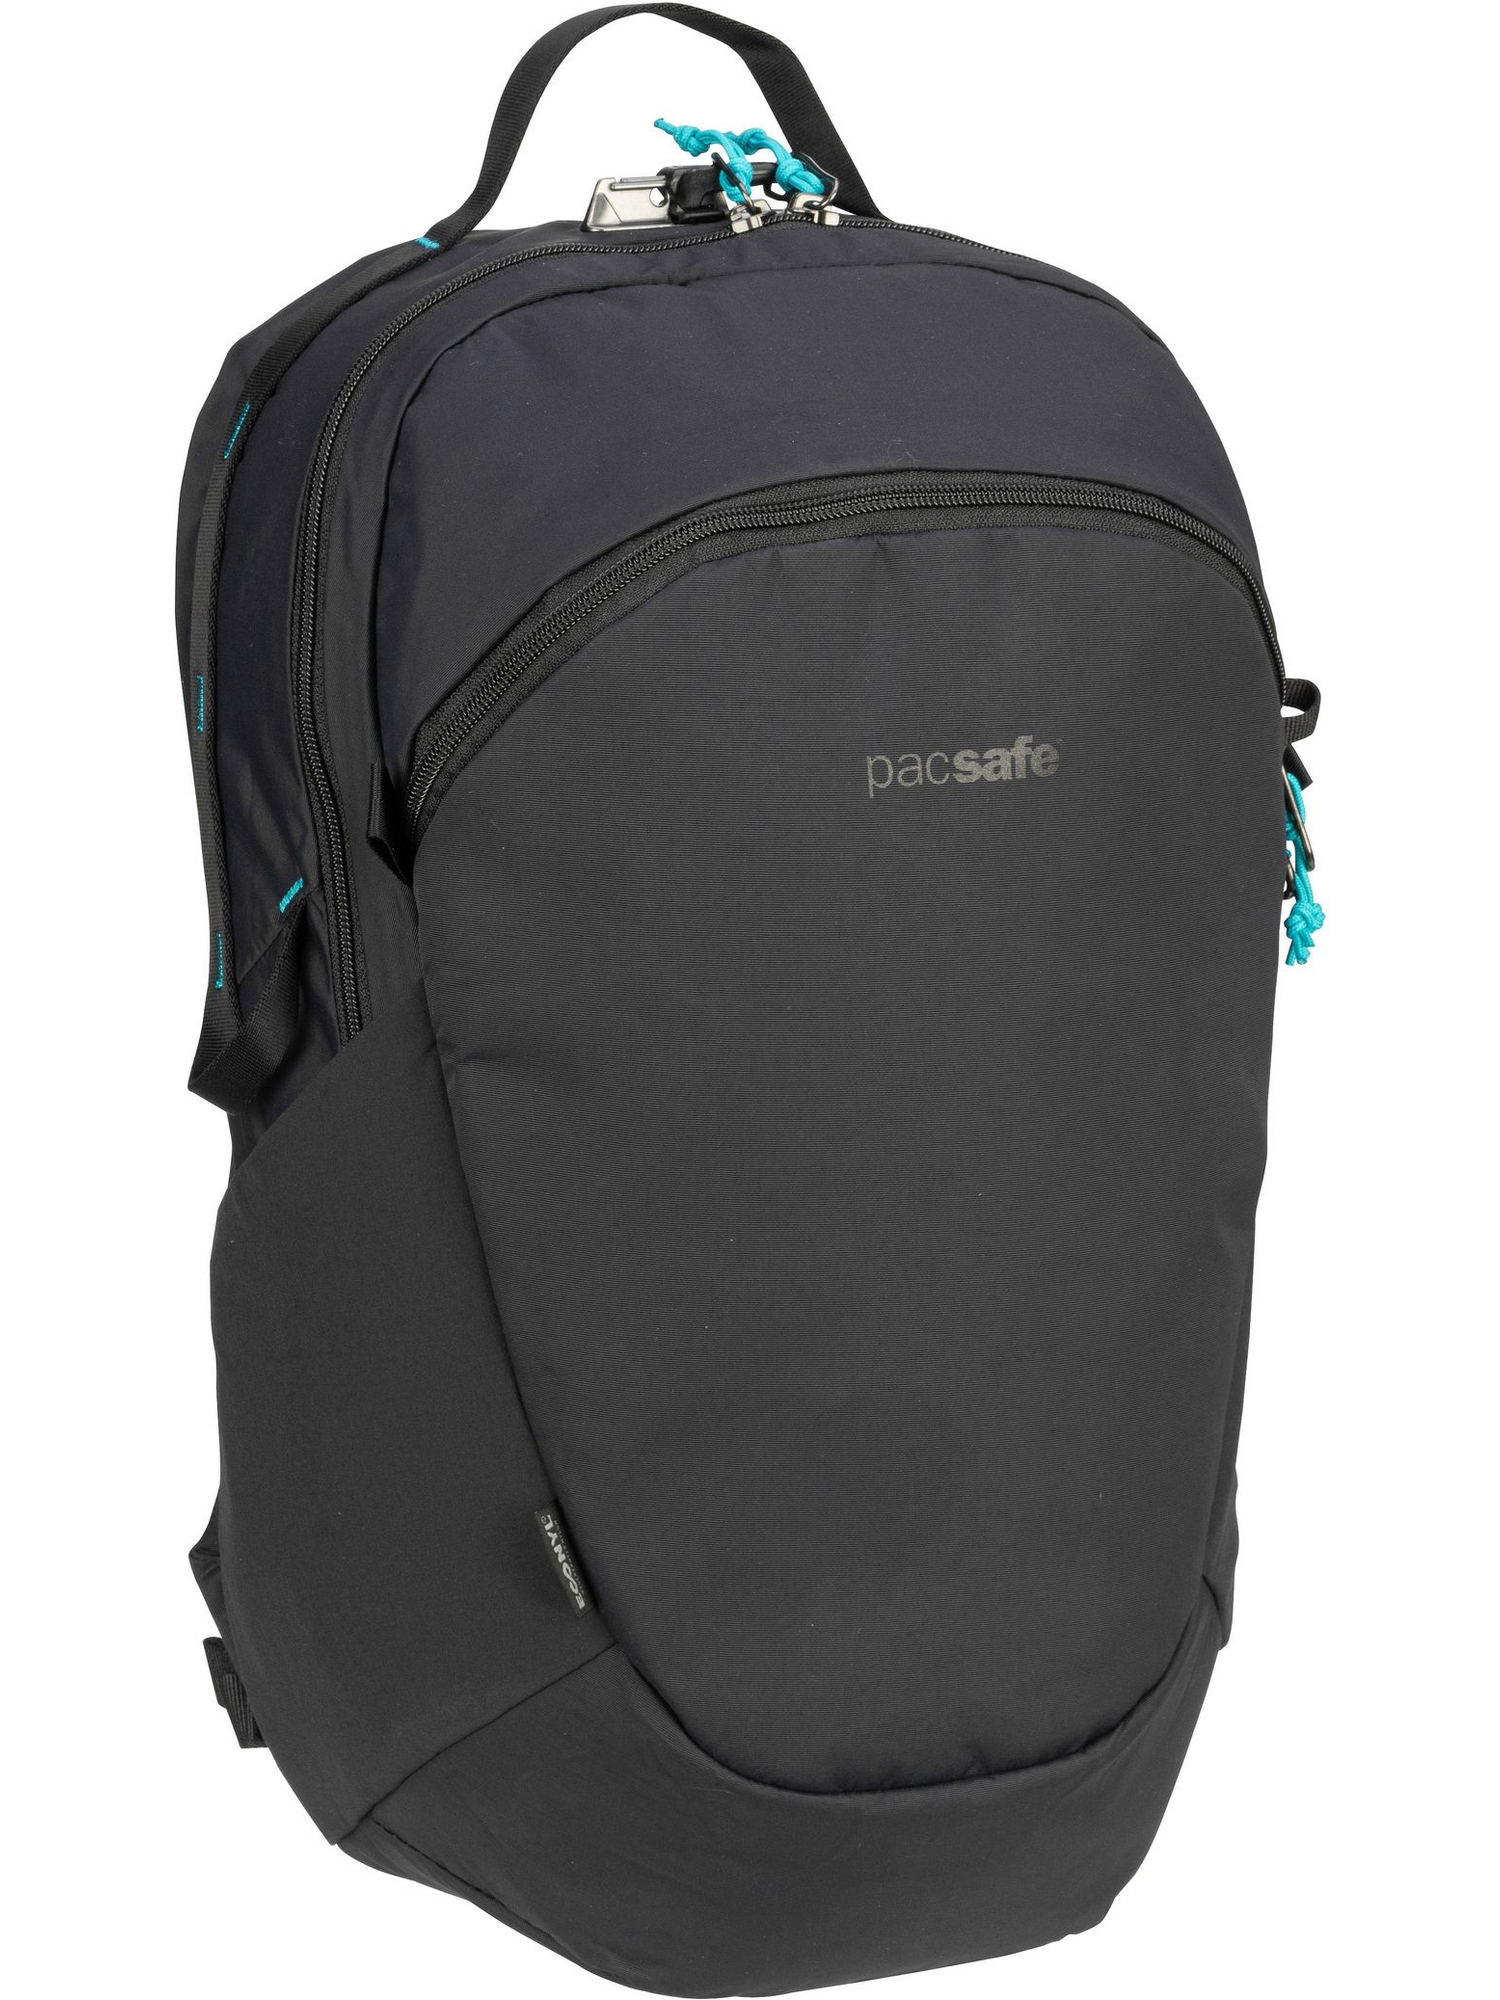 рюкзак pacsafe backpack citysafe cx mini backpack эконил черный Рюкзак Pacsafe/Backpack ECO 18L Backpack, эконил черный